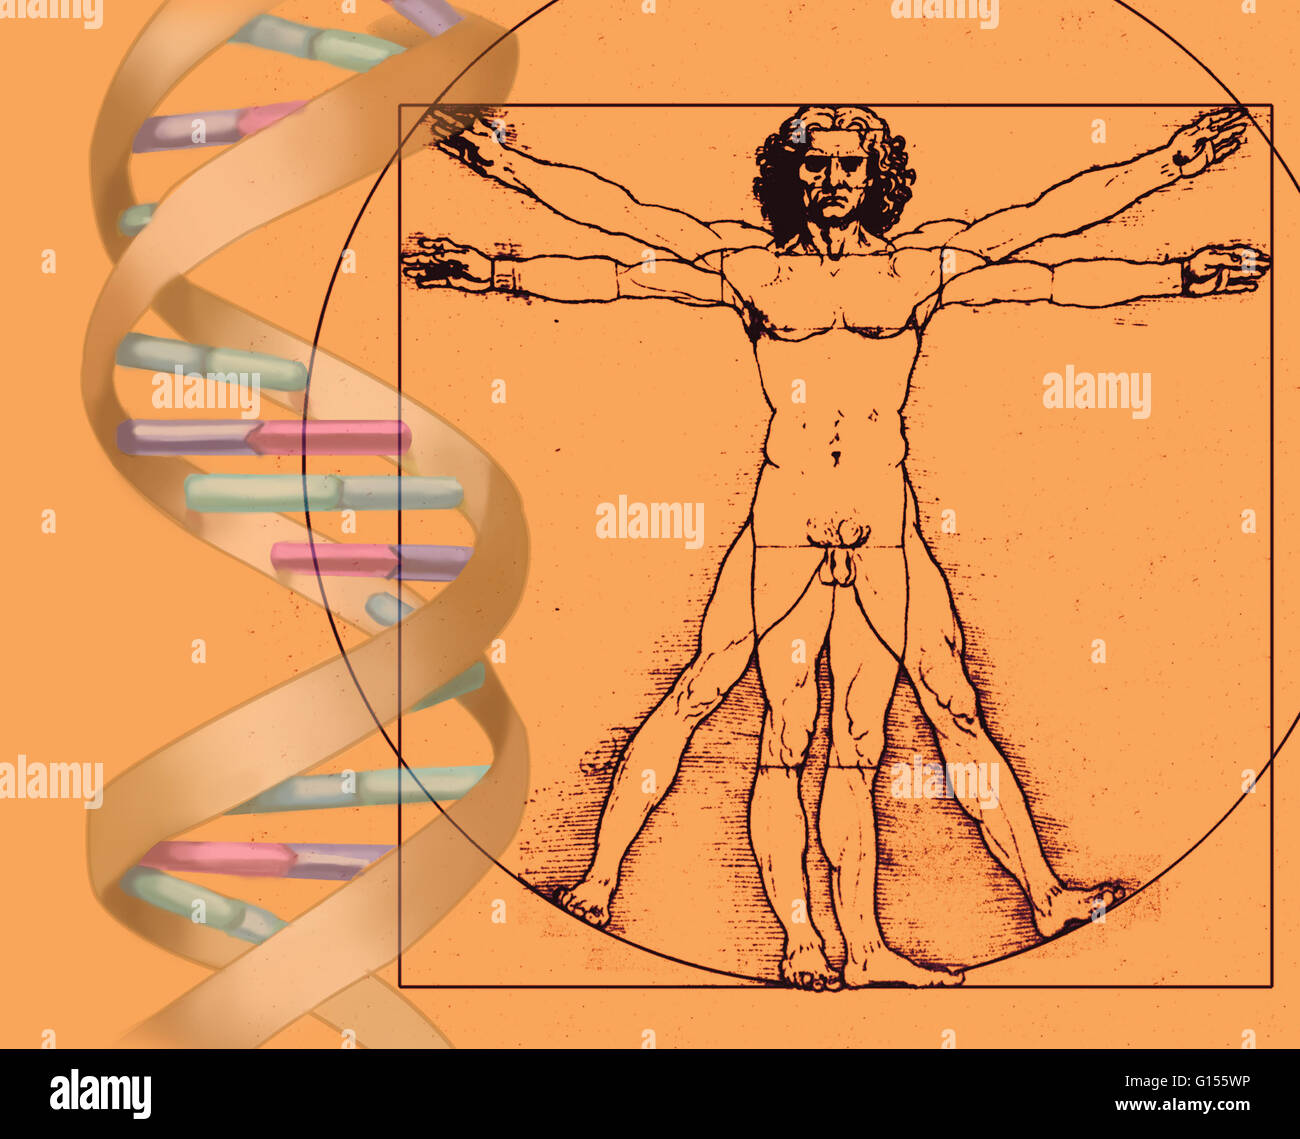 Image combining Leonardo da Vinci's iconic Vitruvian Man drawing with an illustration of DNA. Stock Photo